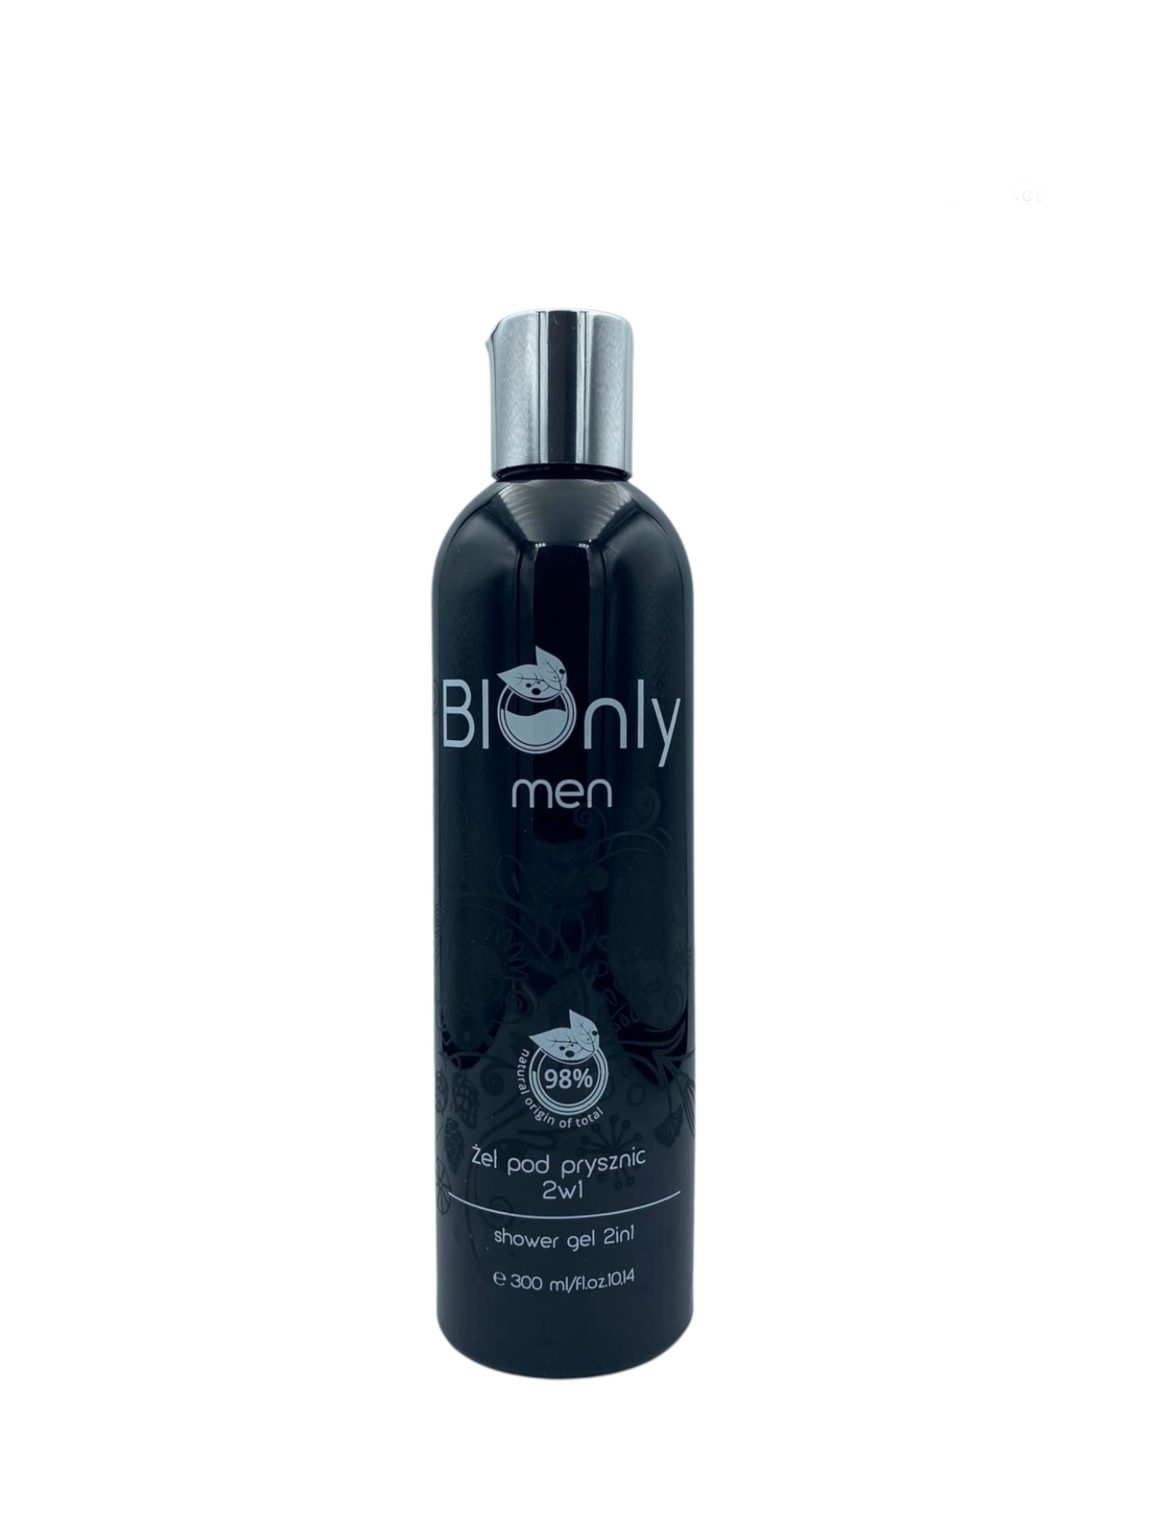 BIOnly Men zel pod prysznic i szampon 2w1 300ml